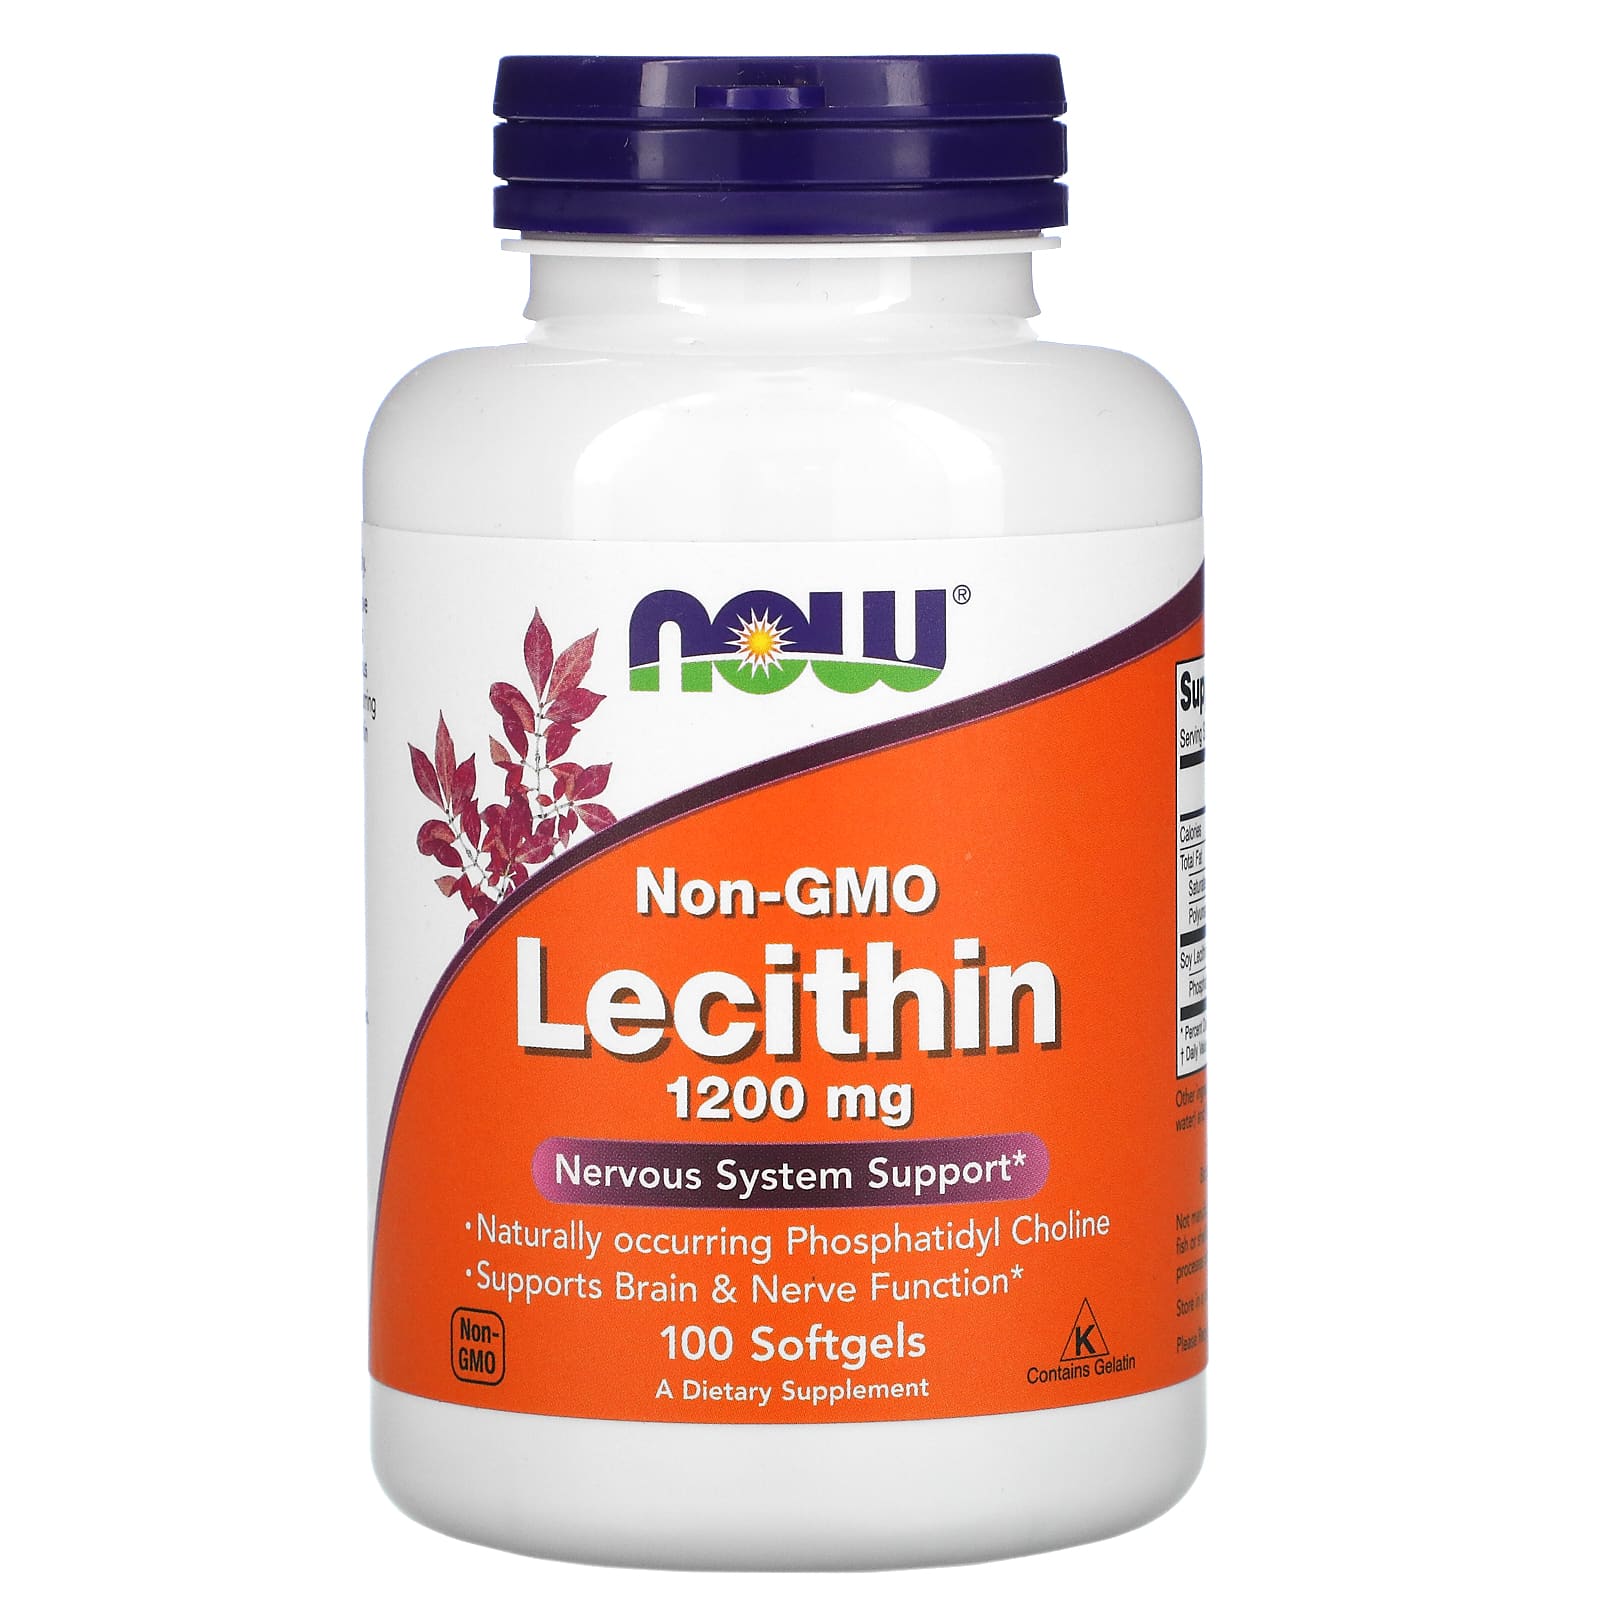 Lecithin function